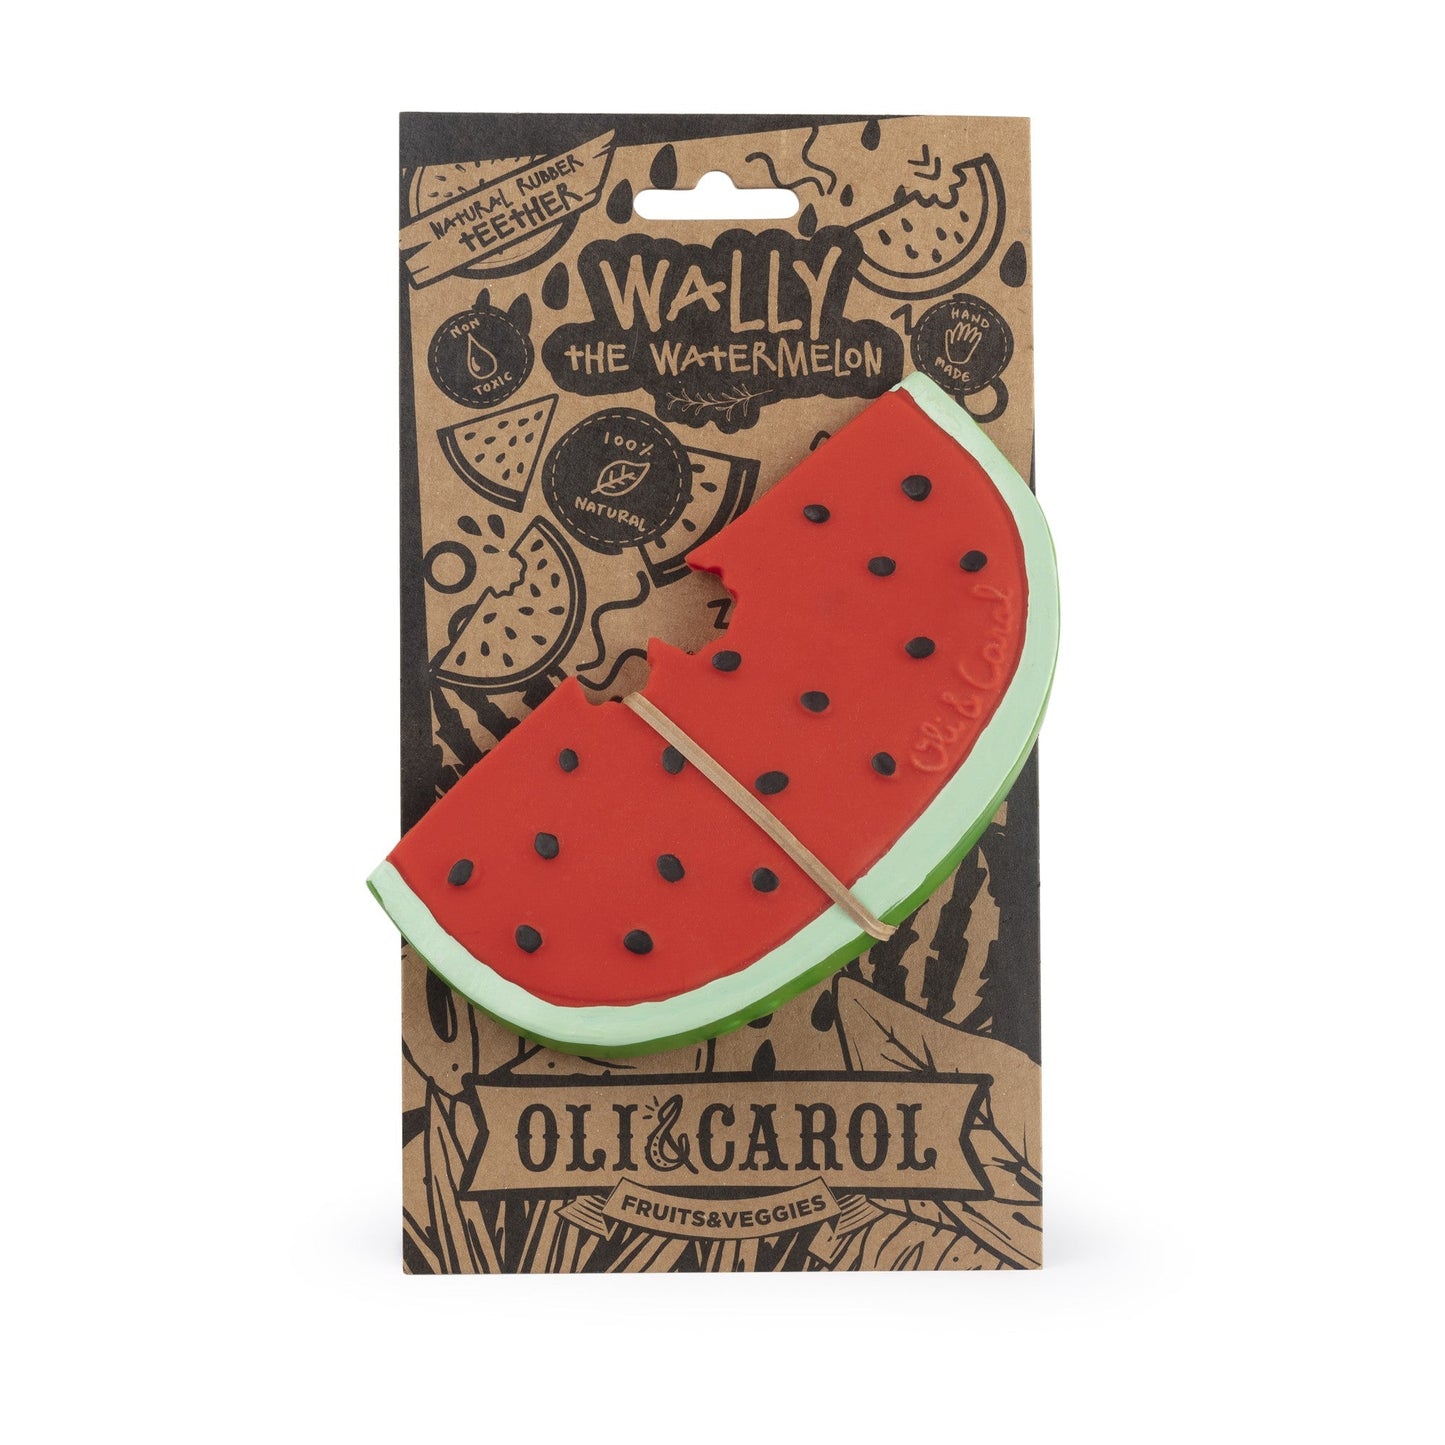 Oli&Carol - Wally The Watermelon - Playlaan